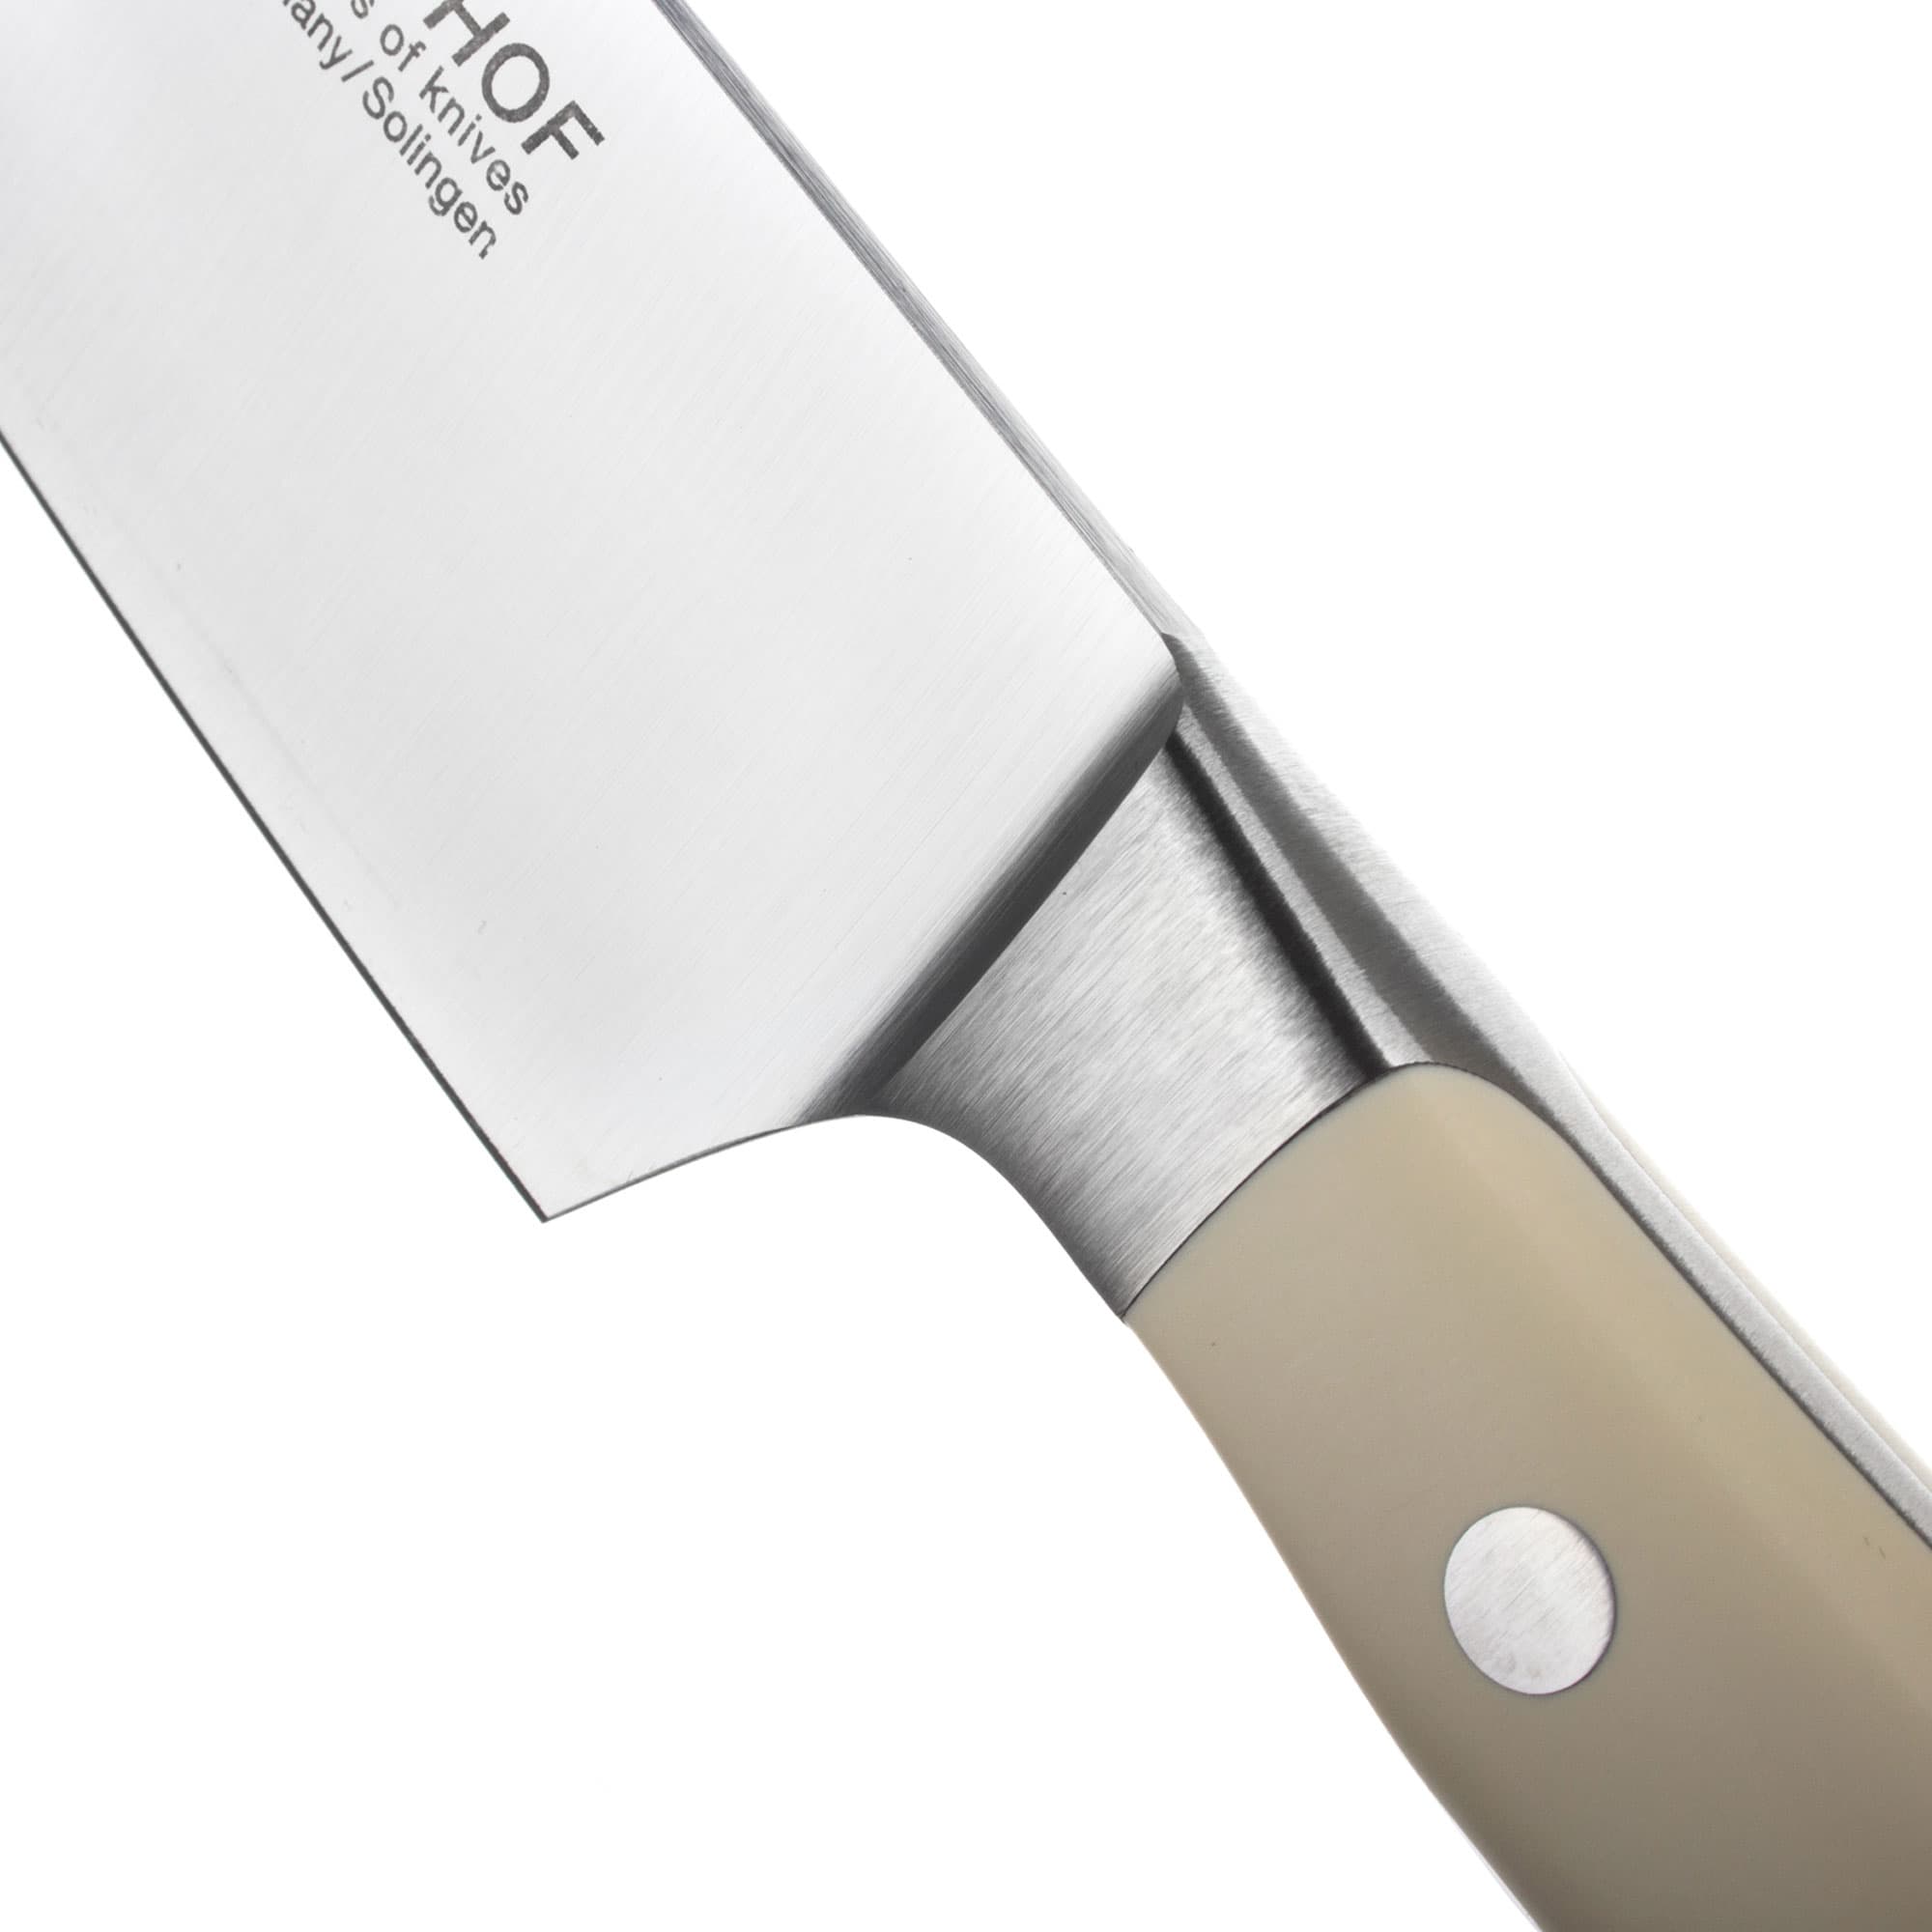 Нож кухонный универсальный 12 см, Ikon Cream White, WUESTHOF, Золинген, Германия